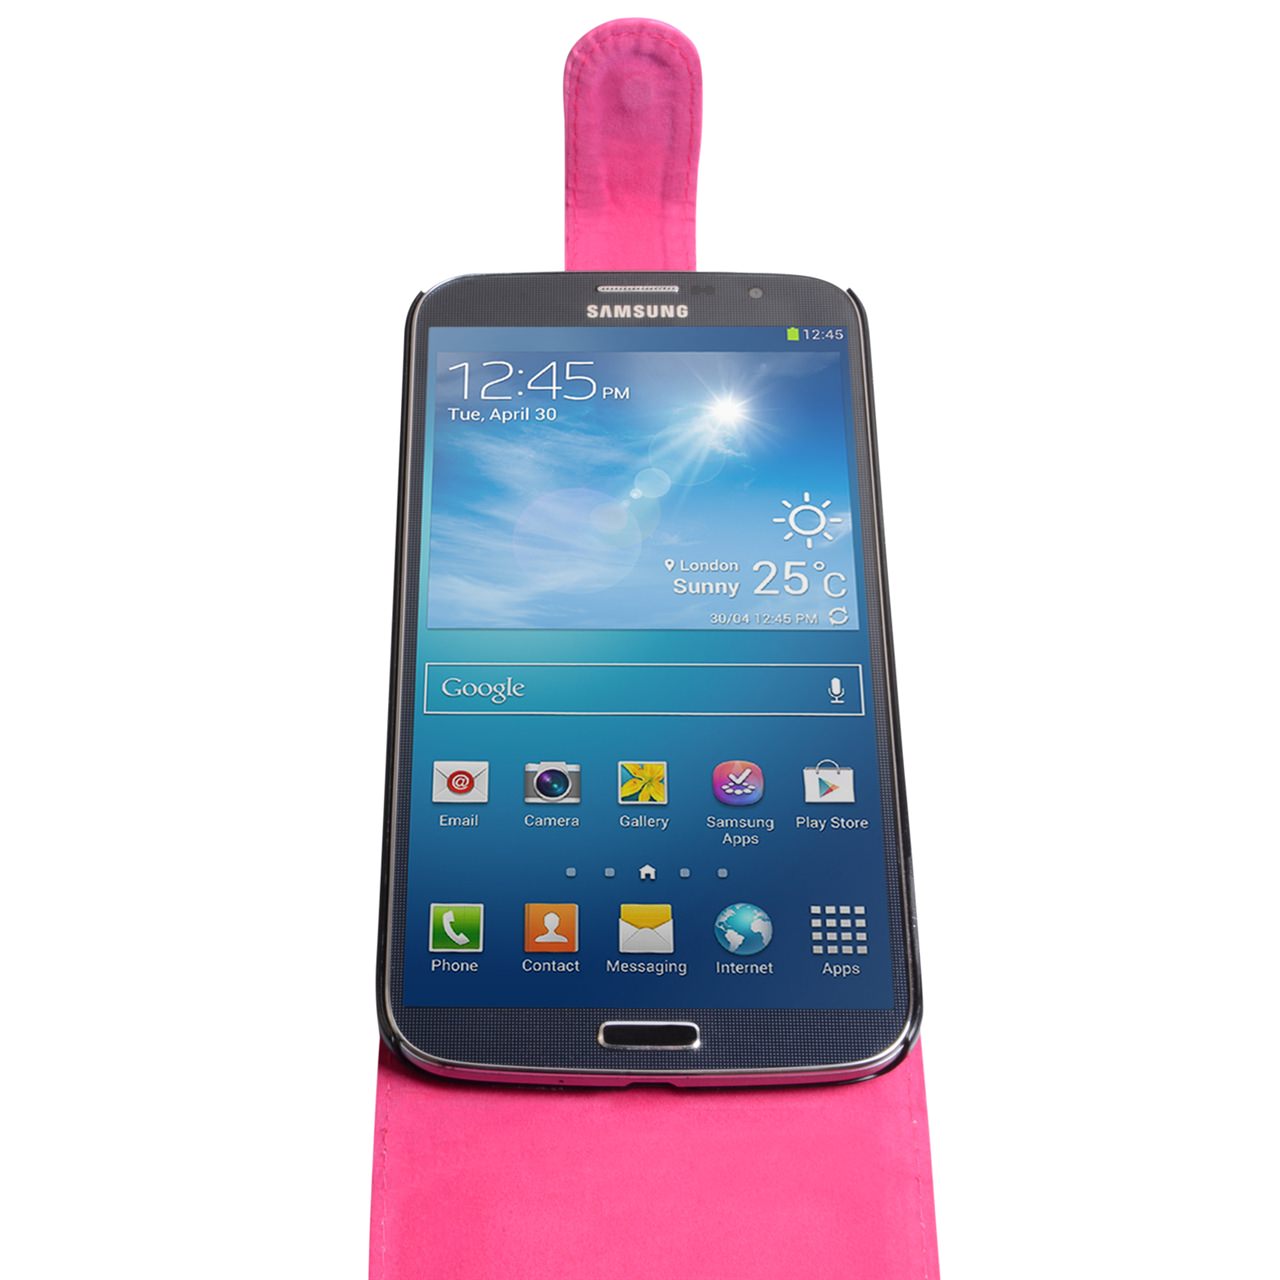 YouSave Samsung Galaxy Mega 6.3 Leather Effect Flip Case - Hot Pink